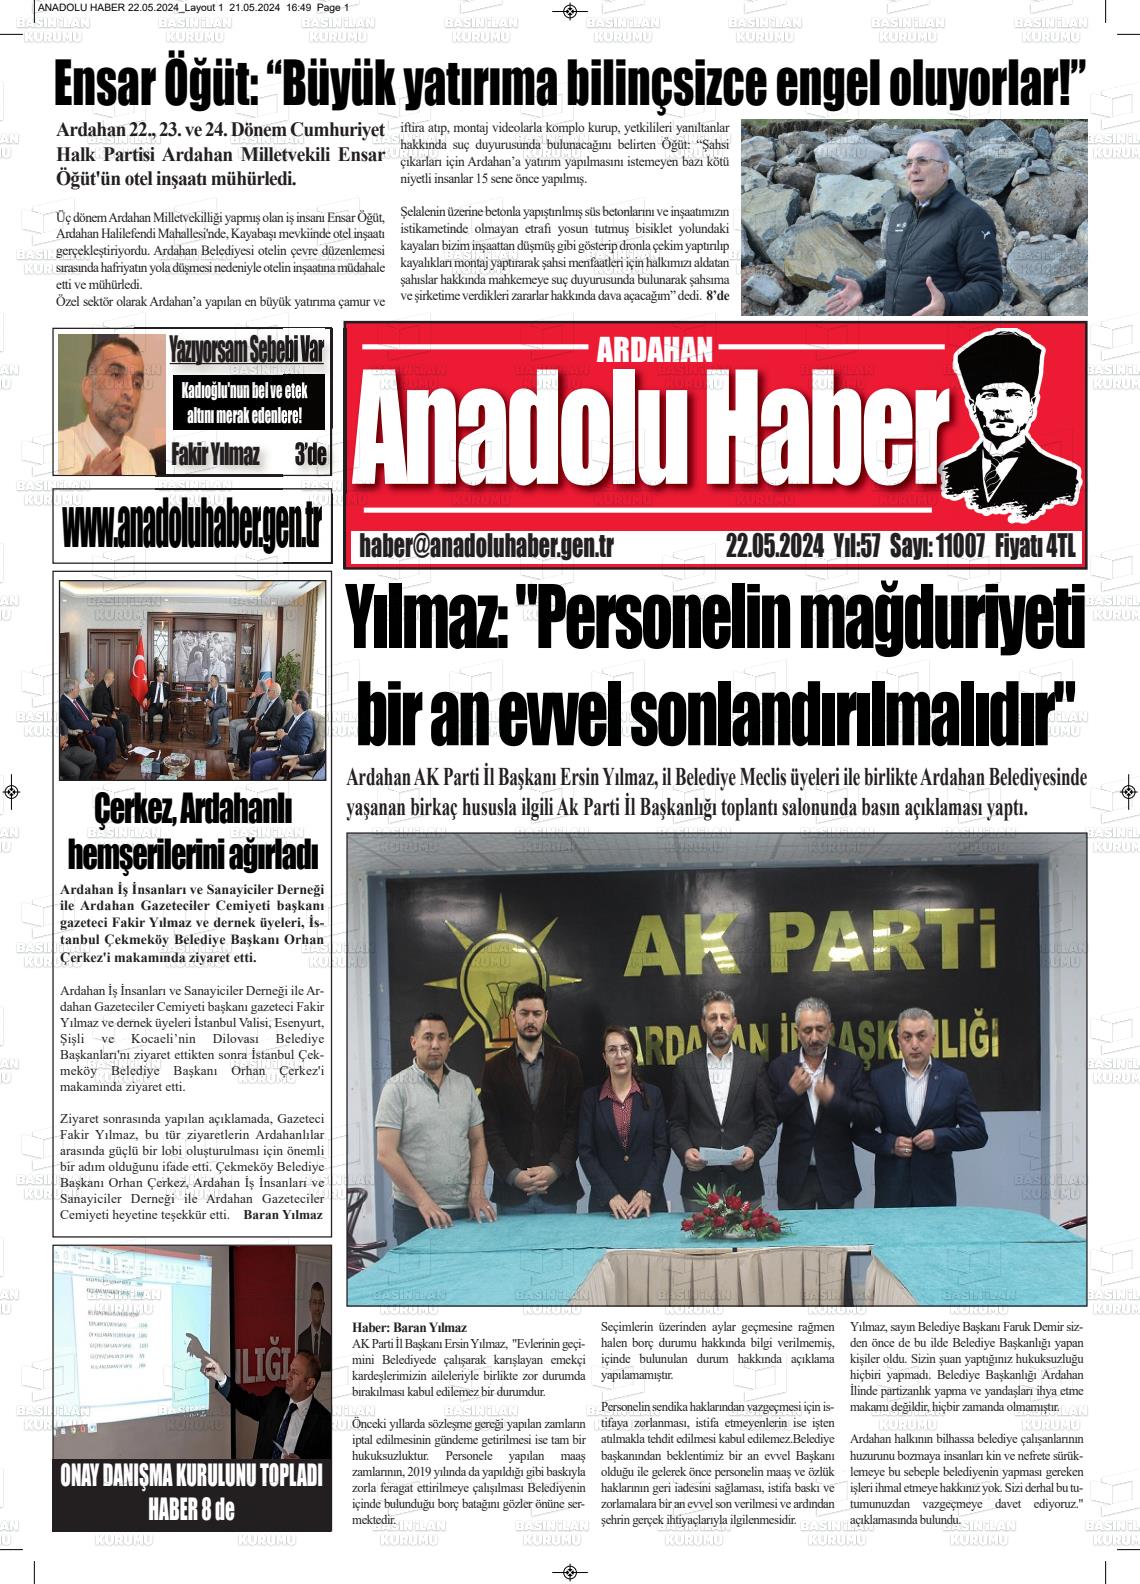 ANADOLU HABER Gazetesi